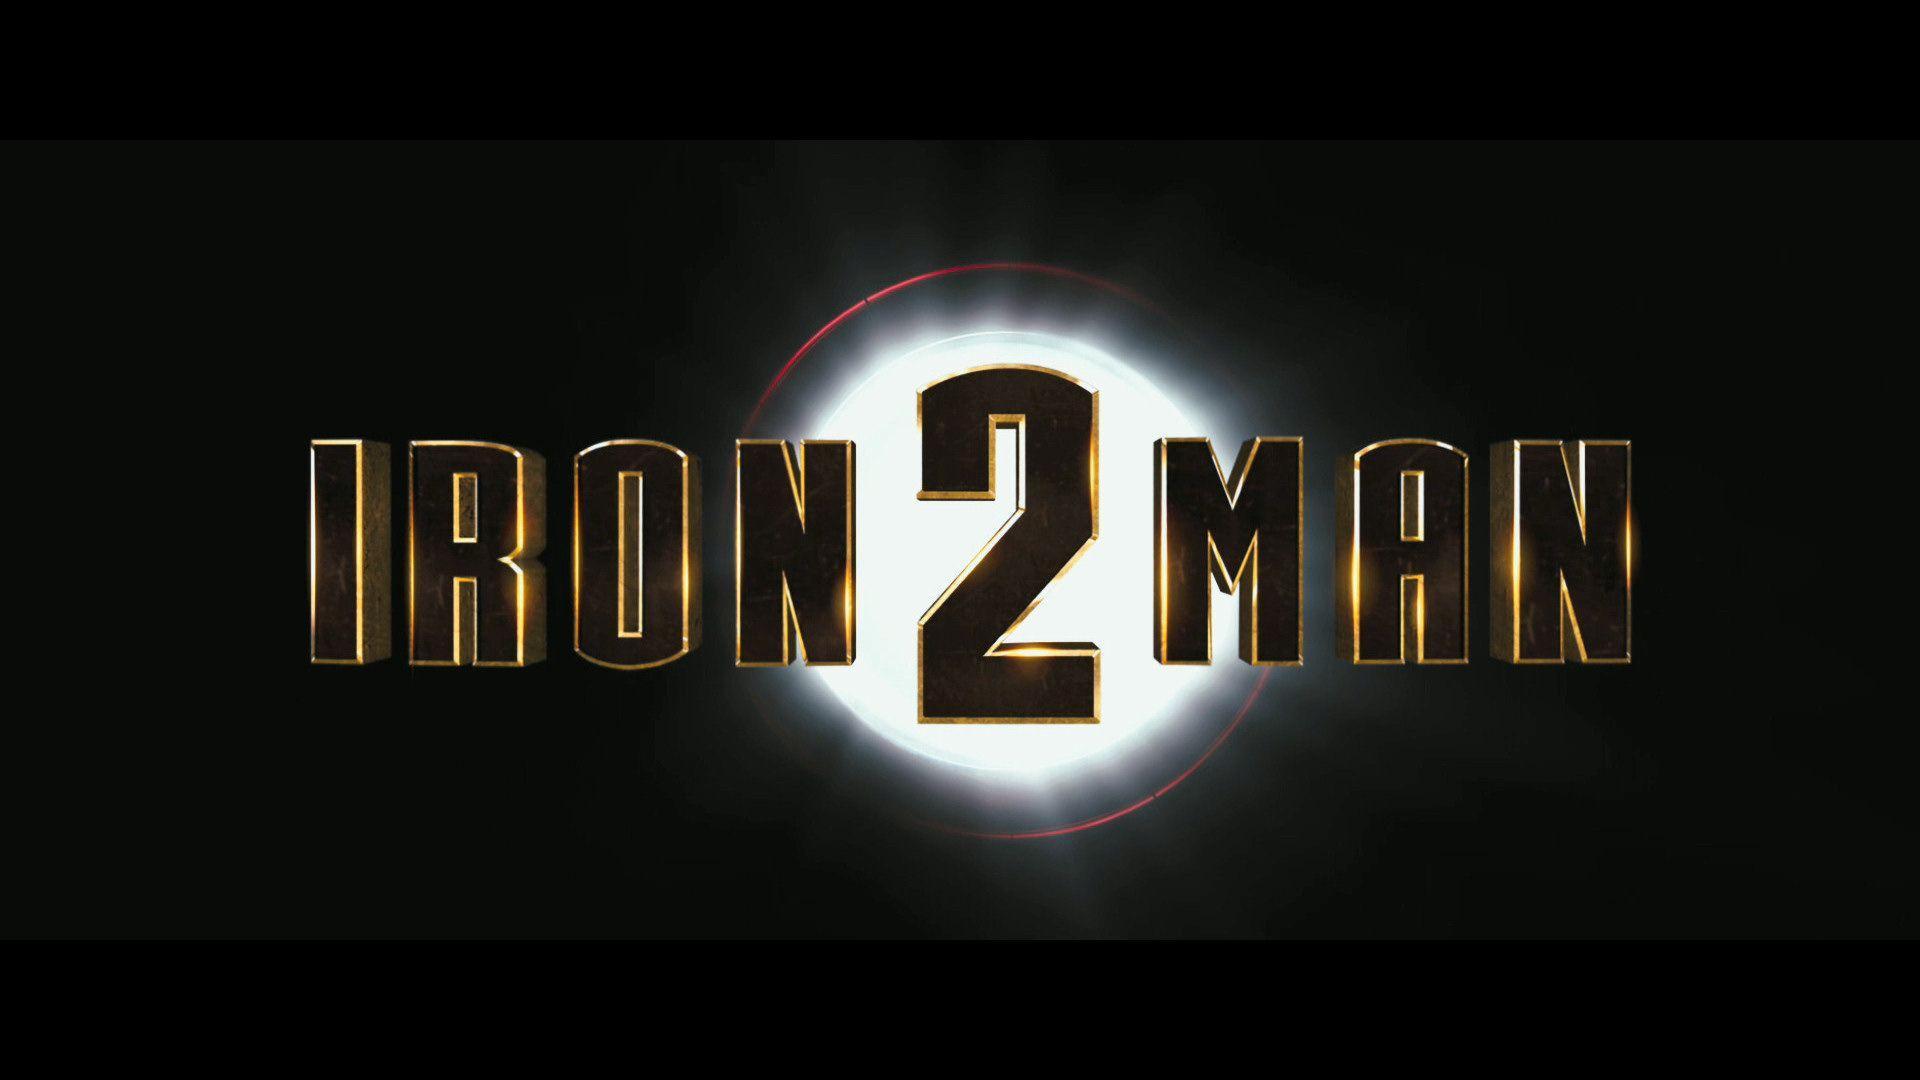 Download the Iron Man 2 Wallpaper, Iron Man 2 iPhone Wallpaper, Iron